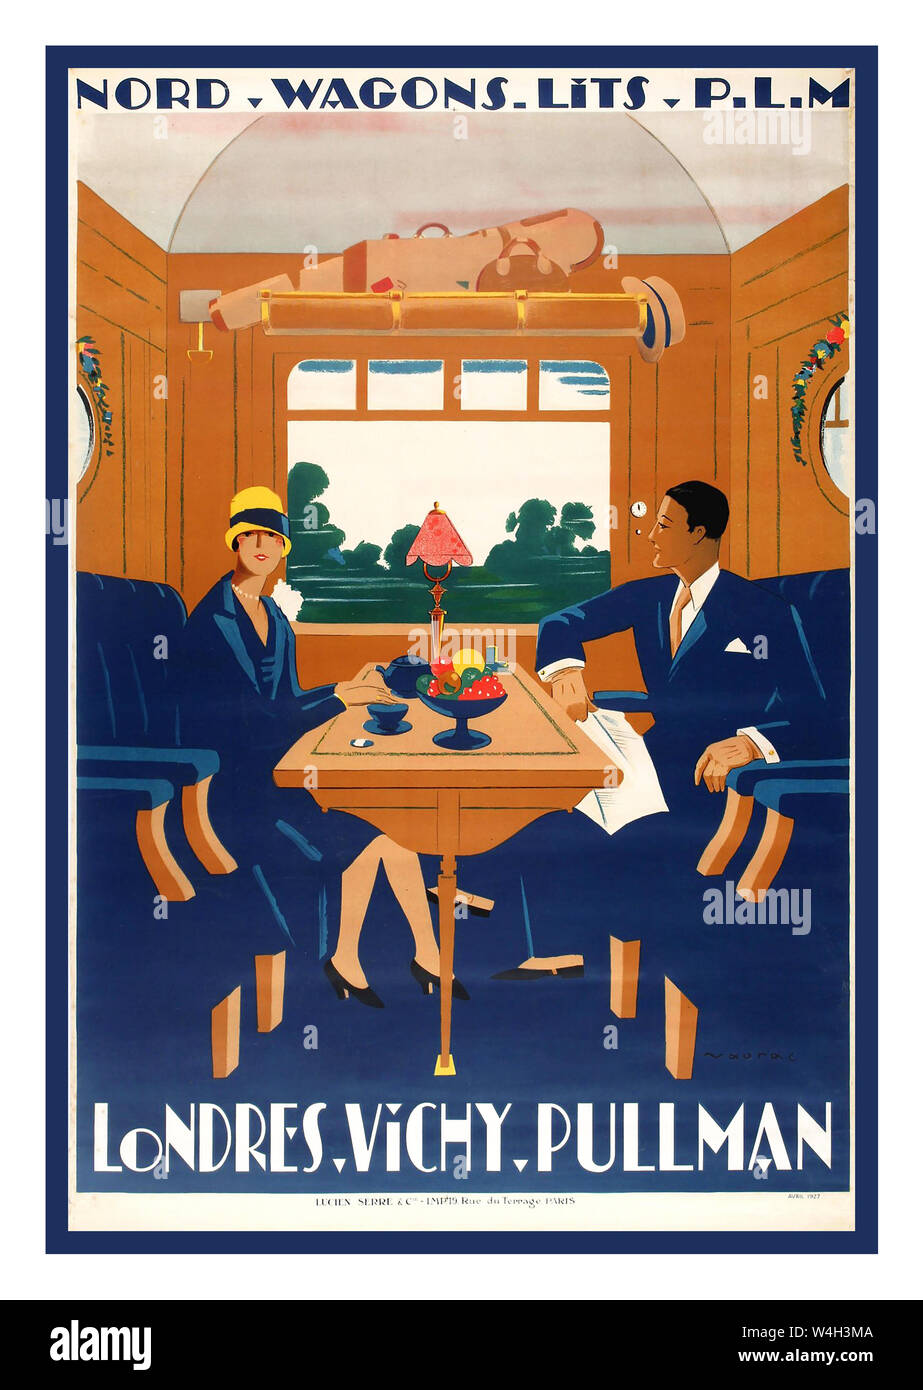 Vintage Rail Luxury Travel  Poster 1927 Nord, Wagons Lits. PLM. Londres Vichy Pullman Travel Art Deco Poster PLM London Pullman Railway by Naurac Stock Photo